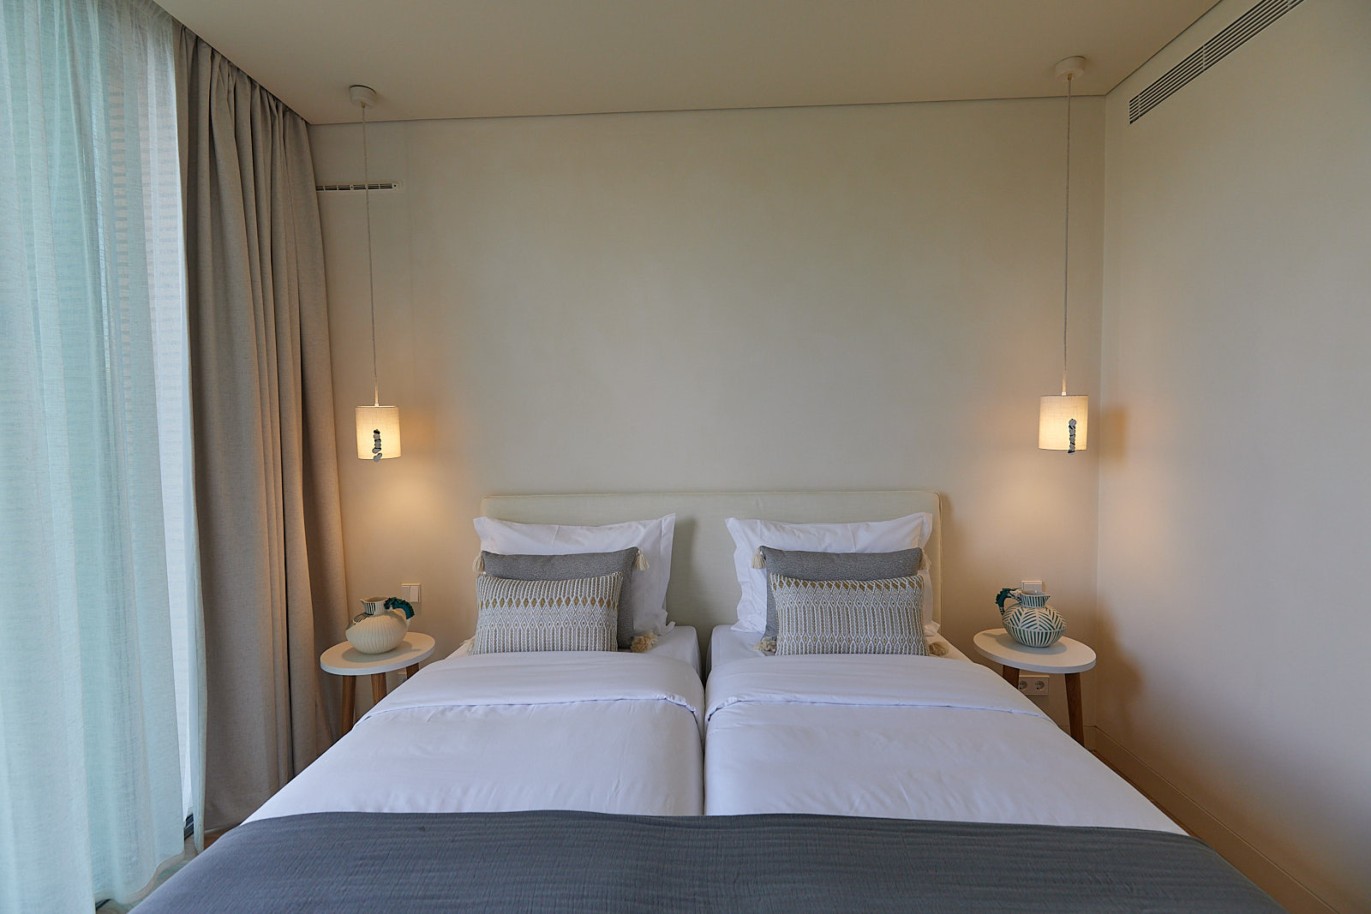 2 bedroom apartment in resort, for sale in Porches, Algarve_228891